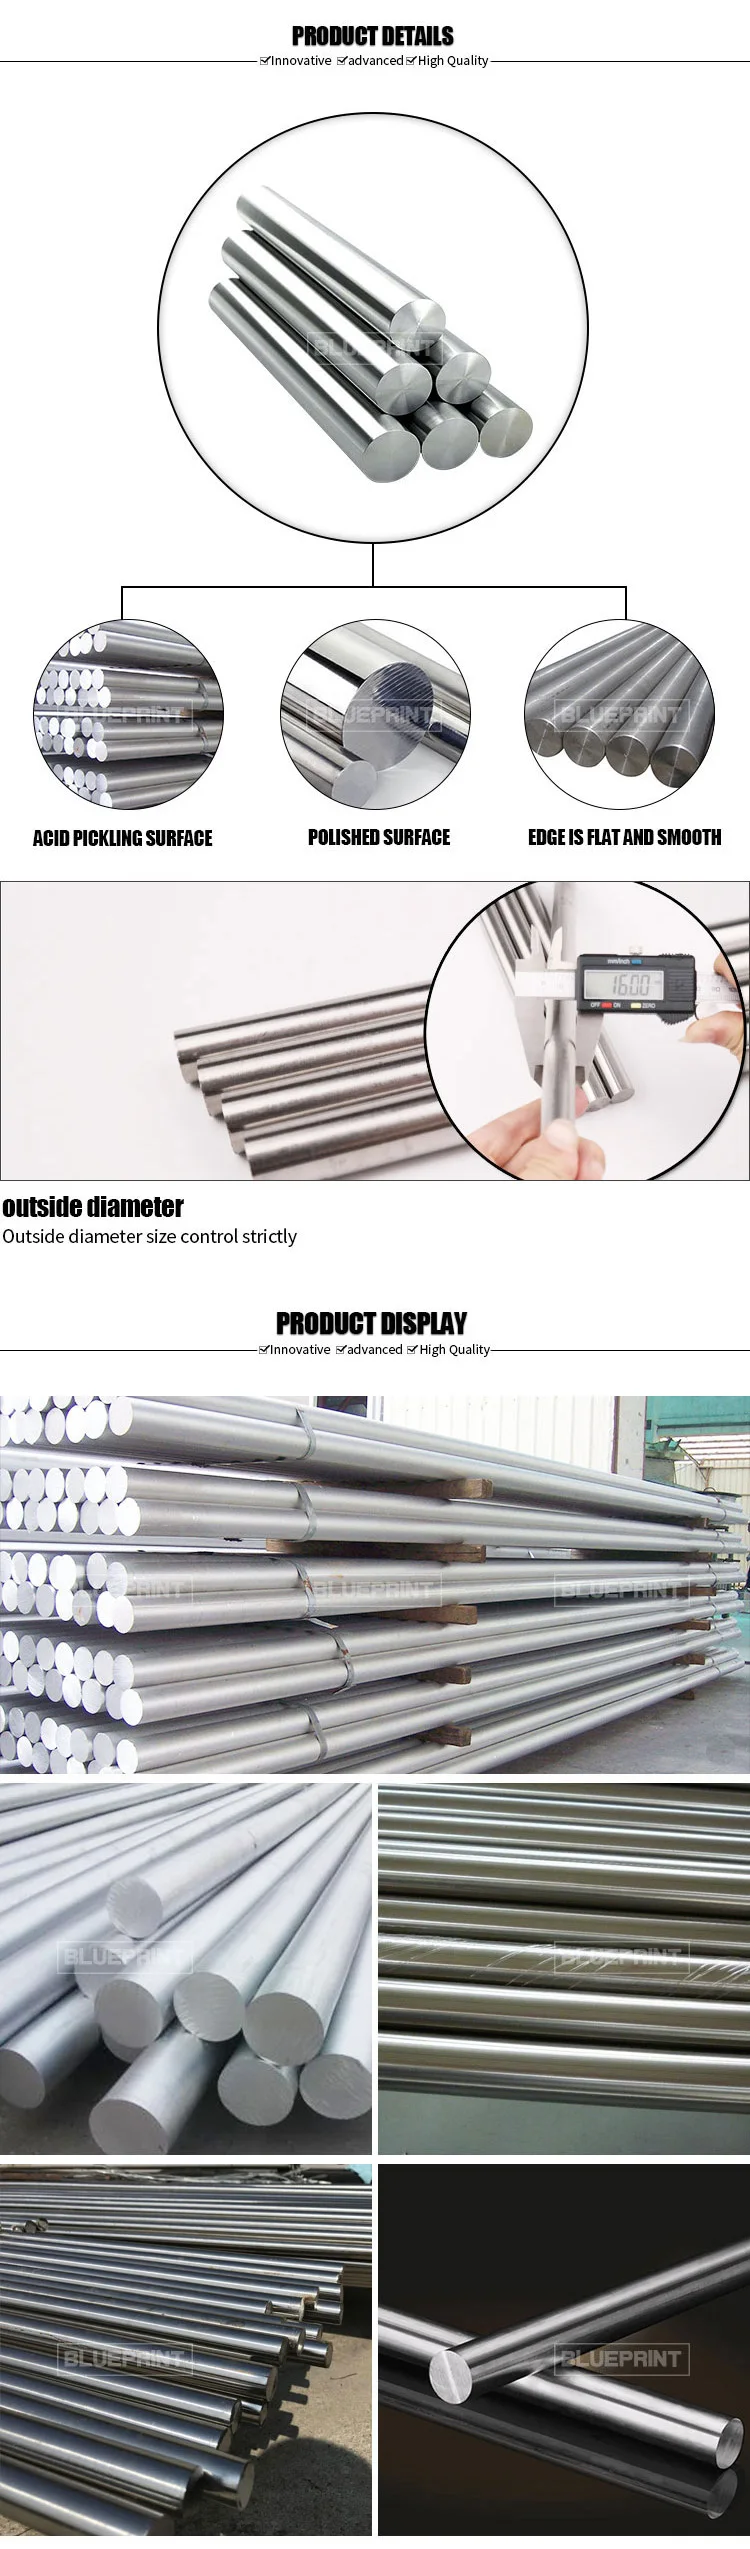 ss 304 bar 316l stainless steel round bar 6mm manufacturer